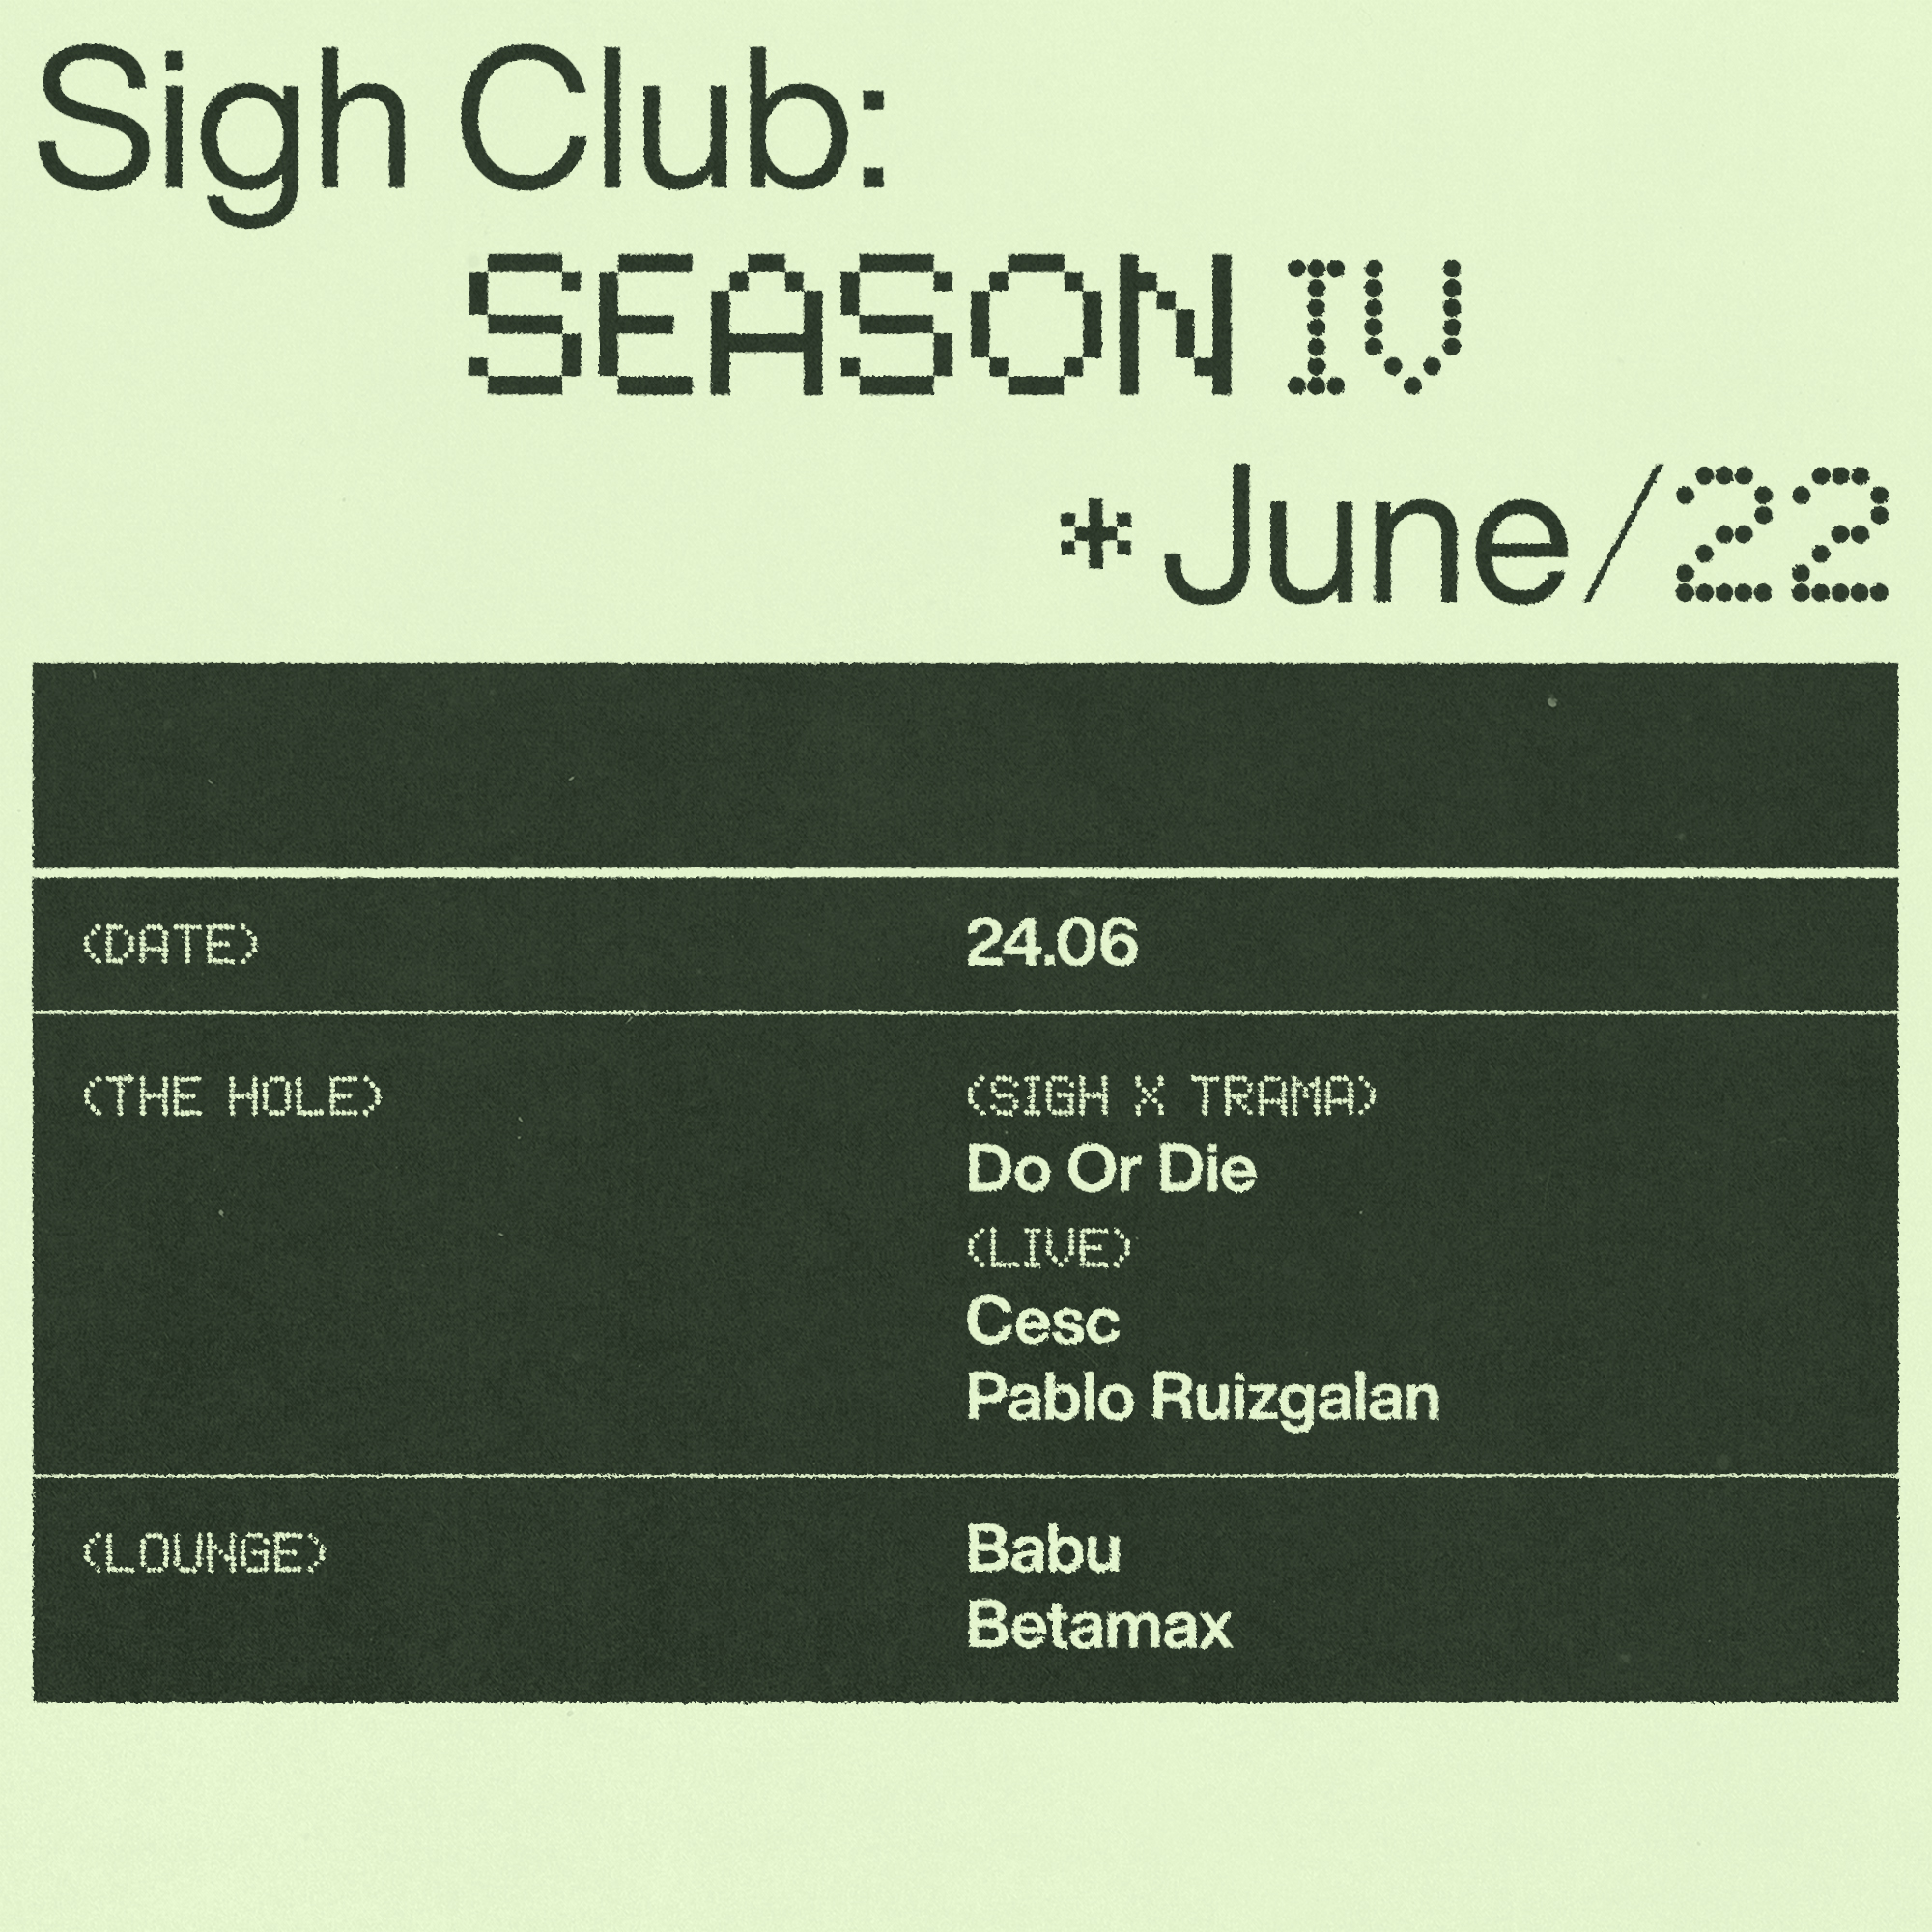 Sigh Club: Do or Die, Cesc, Betamax, Babu, Pablo Ruizgalan - Flyer front